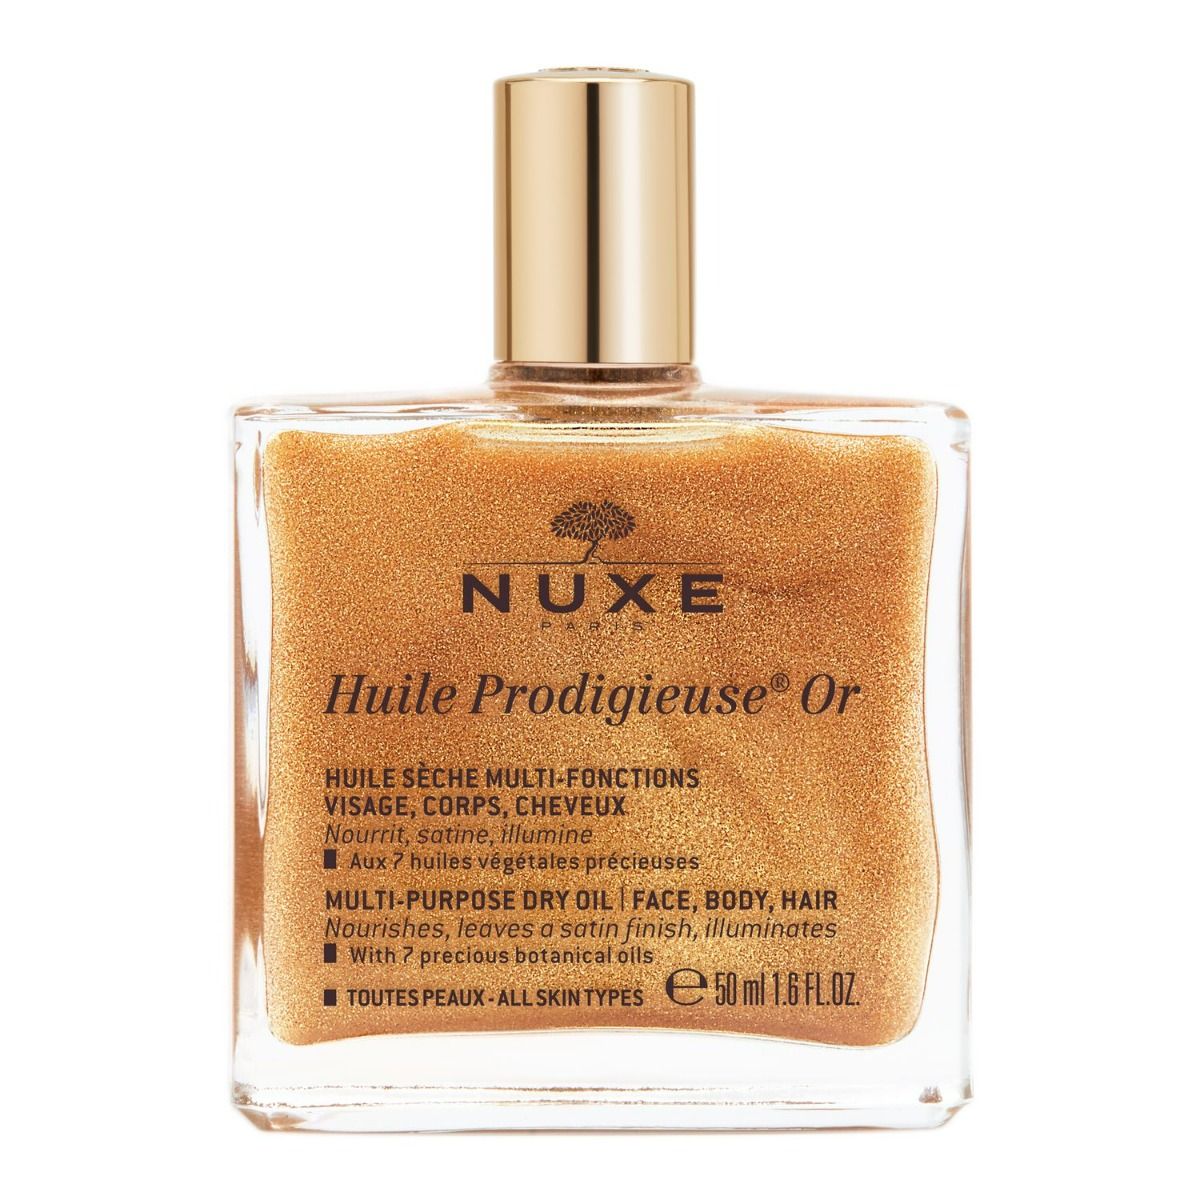 Nuxe Huile Prodigieuse Or масло для лица, тела и волос, 50 ml